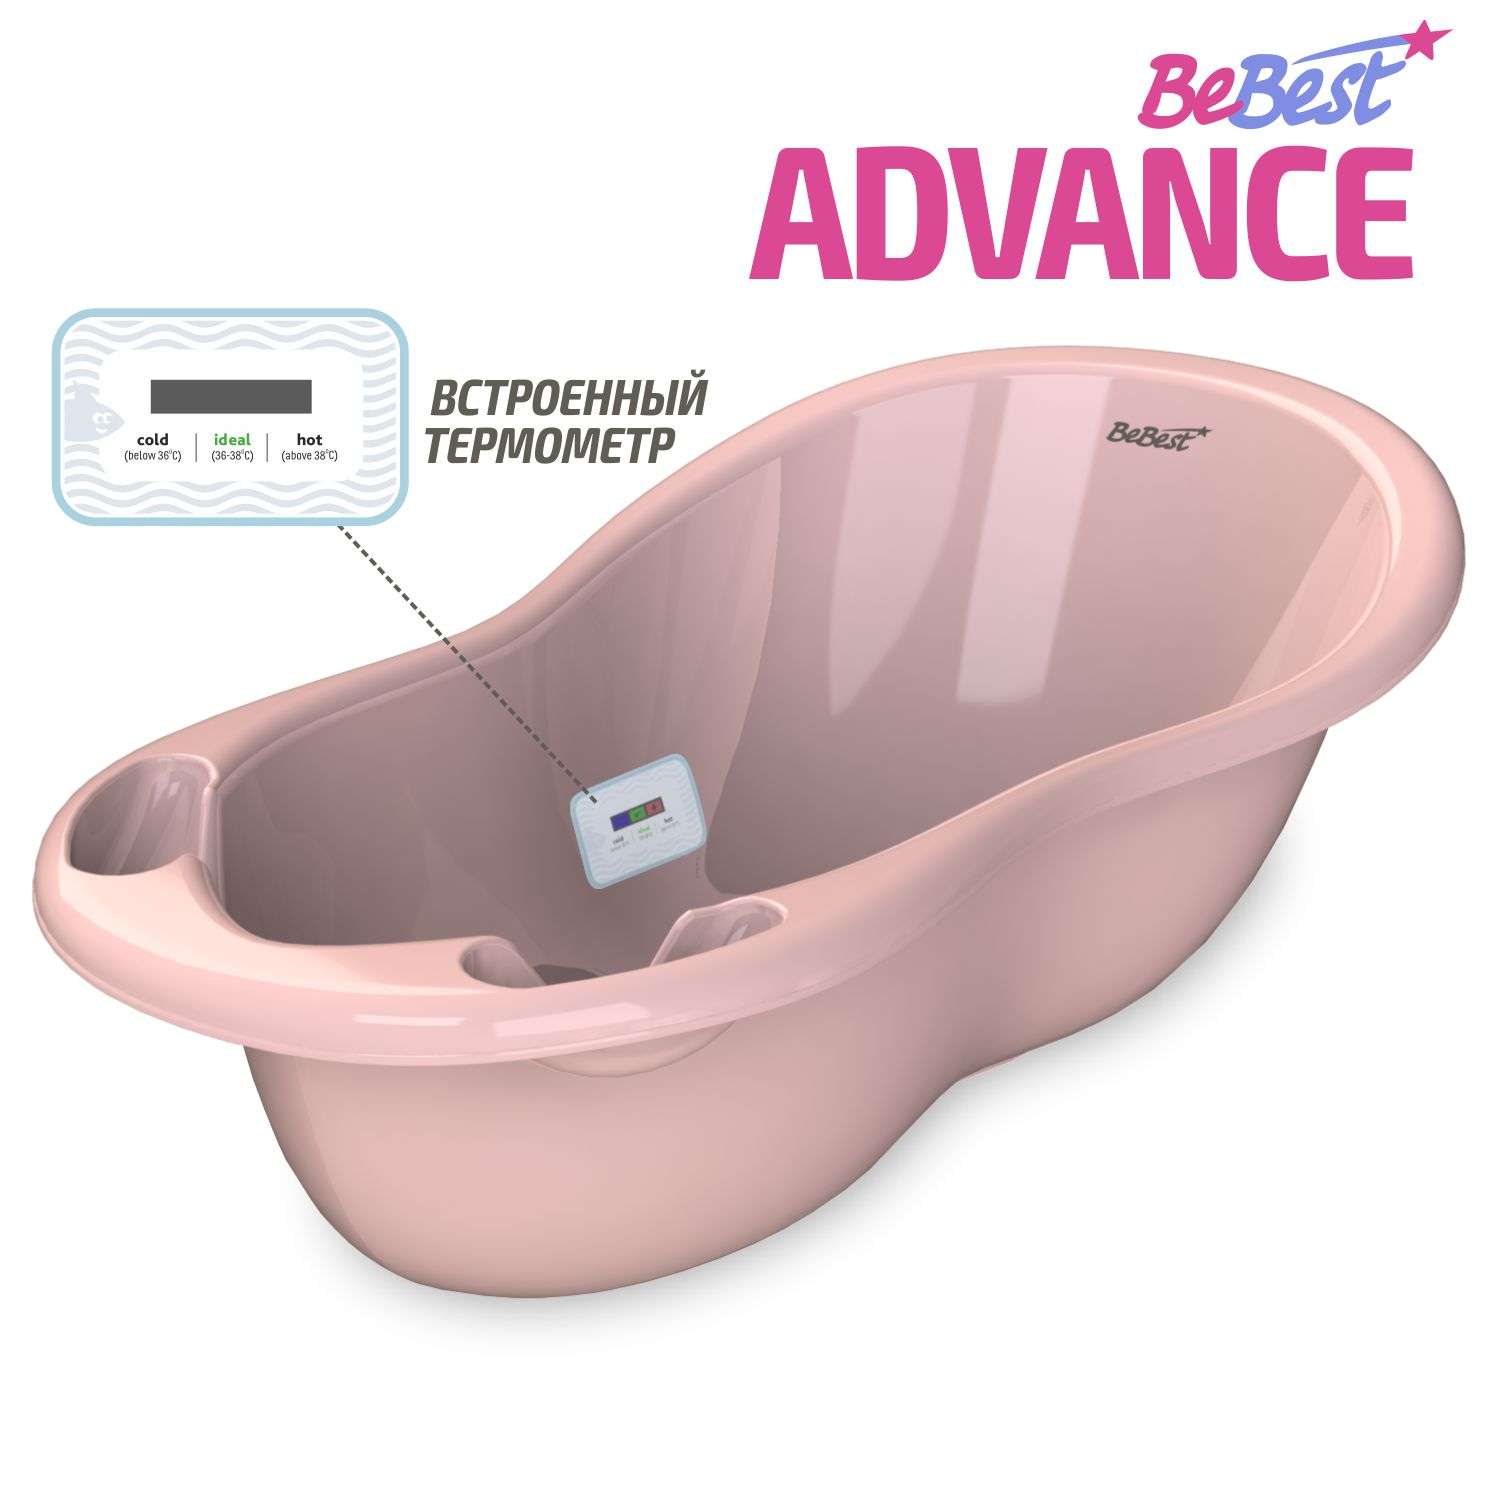 Ванночка для купания BeBest Advance с термометром розовый - фото 1